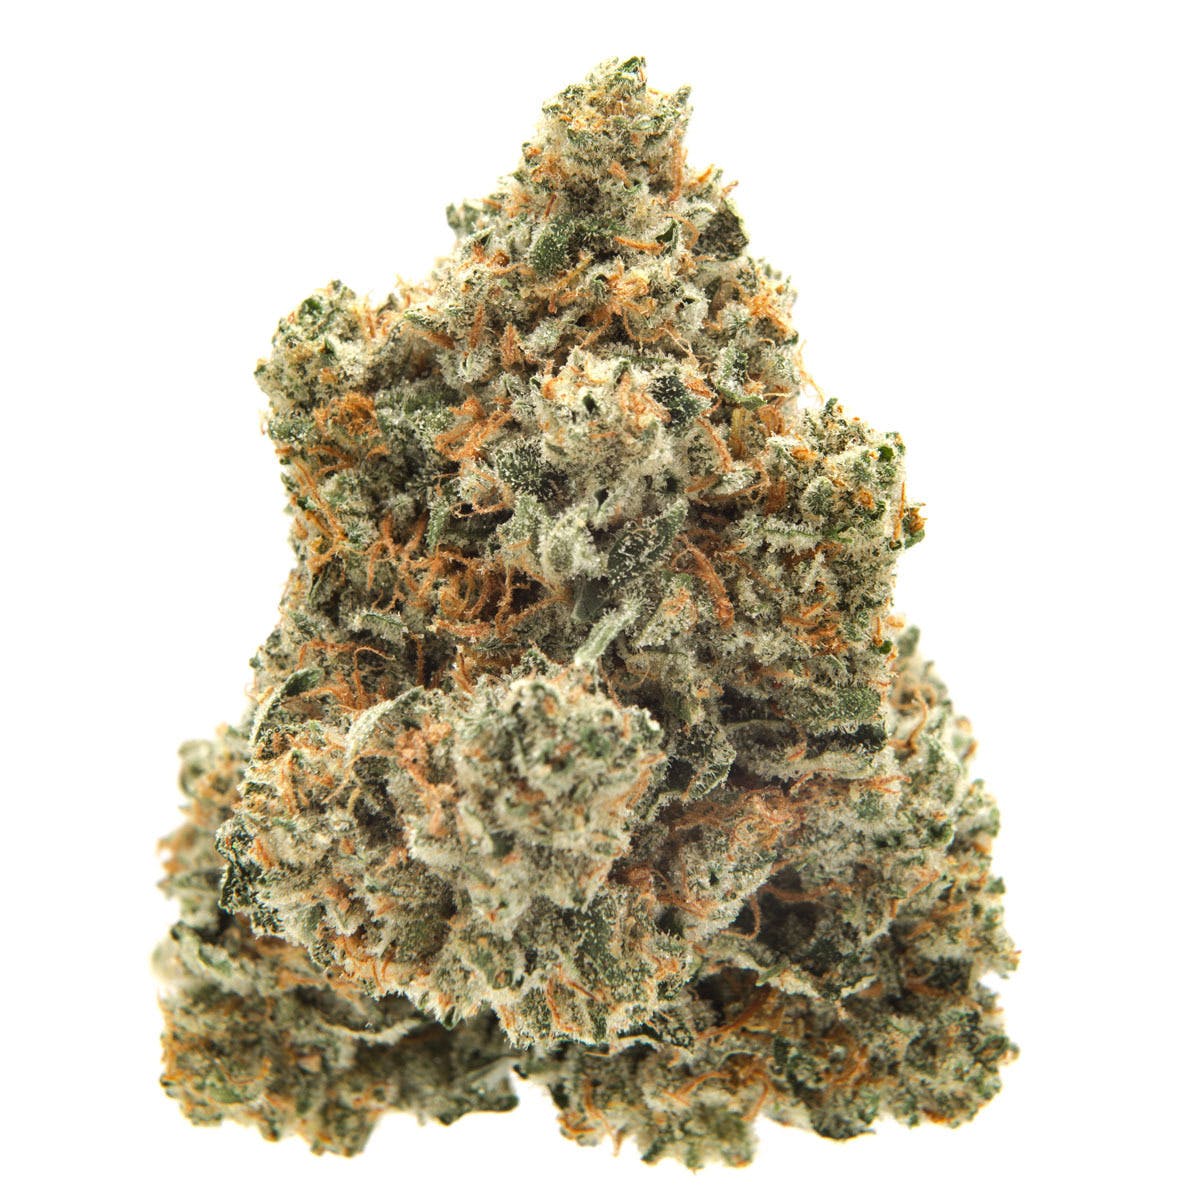 marijuana-dispensaries-new-generation-in-santa-ana-amg-2317